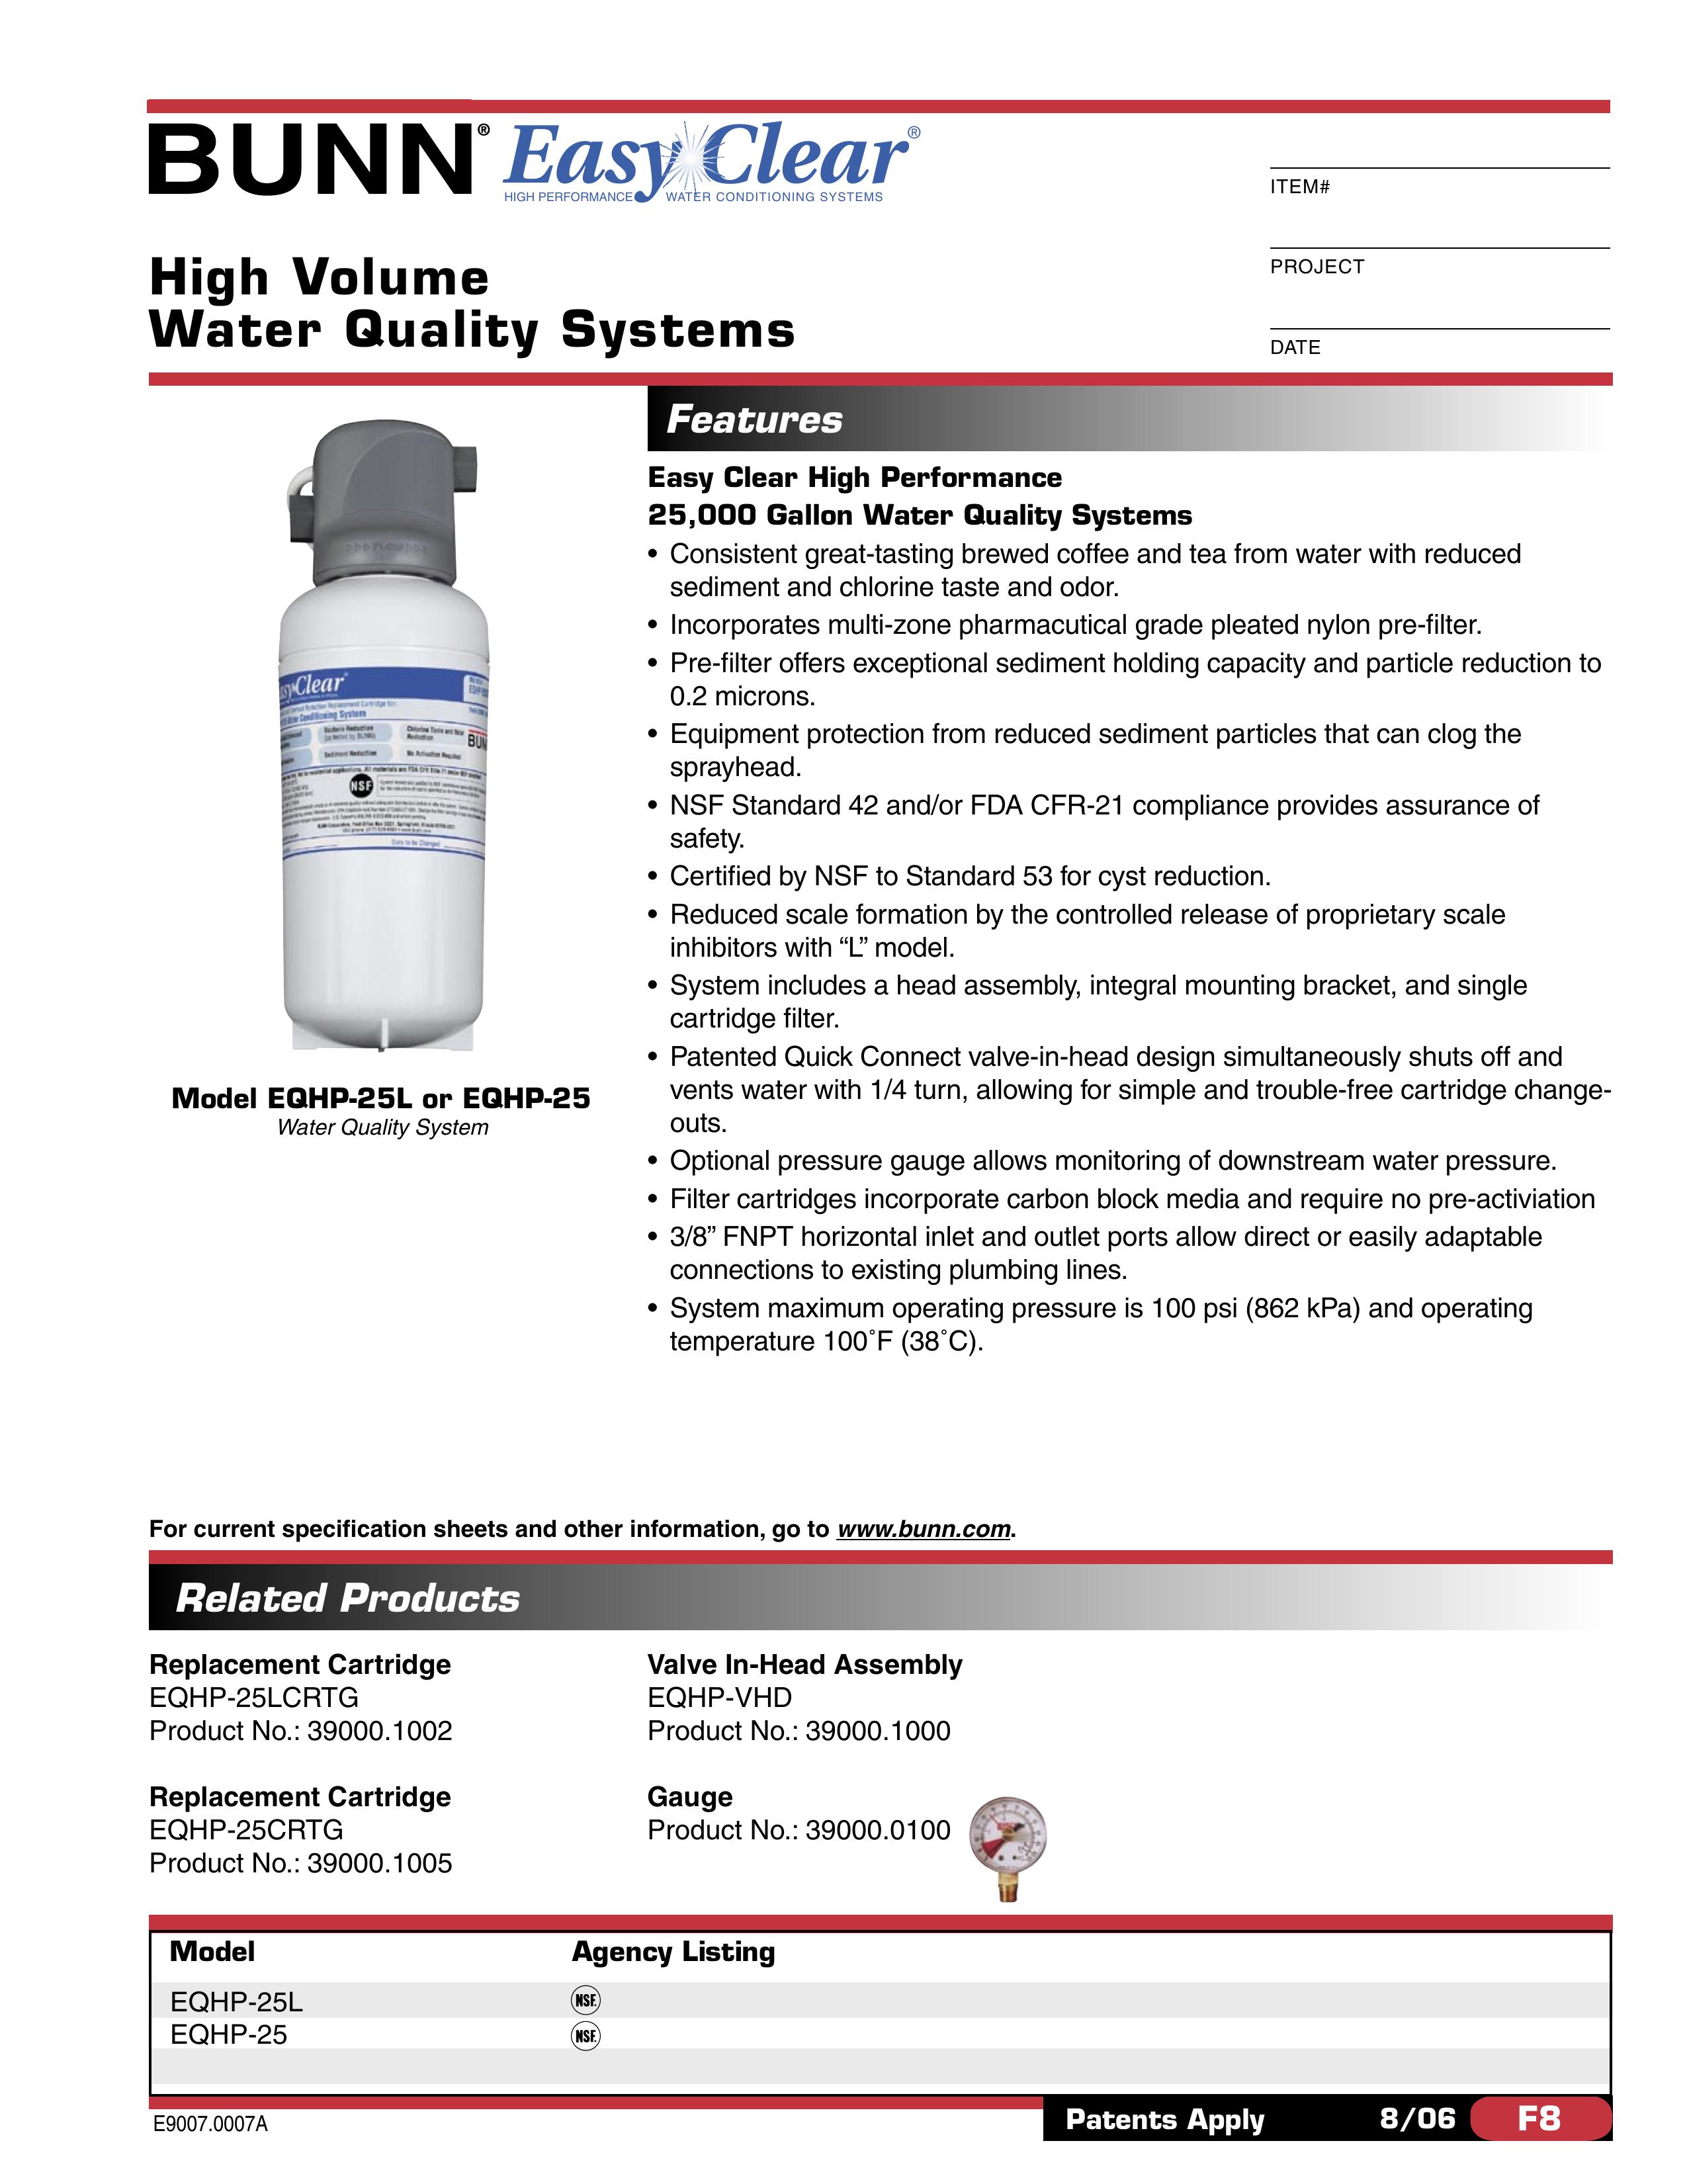 Bunn EQHP-25 Water Dispenser User Manual